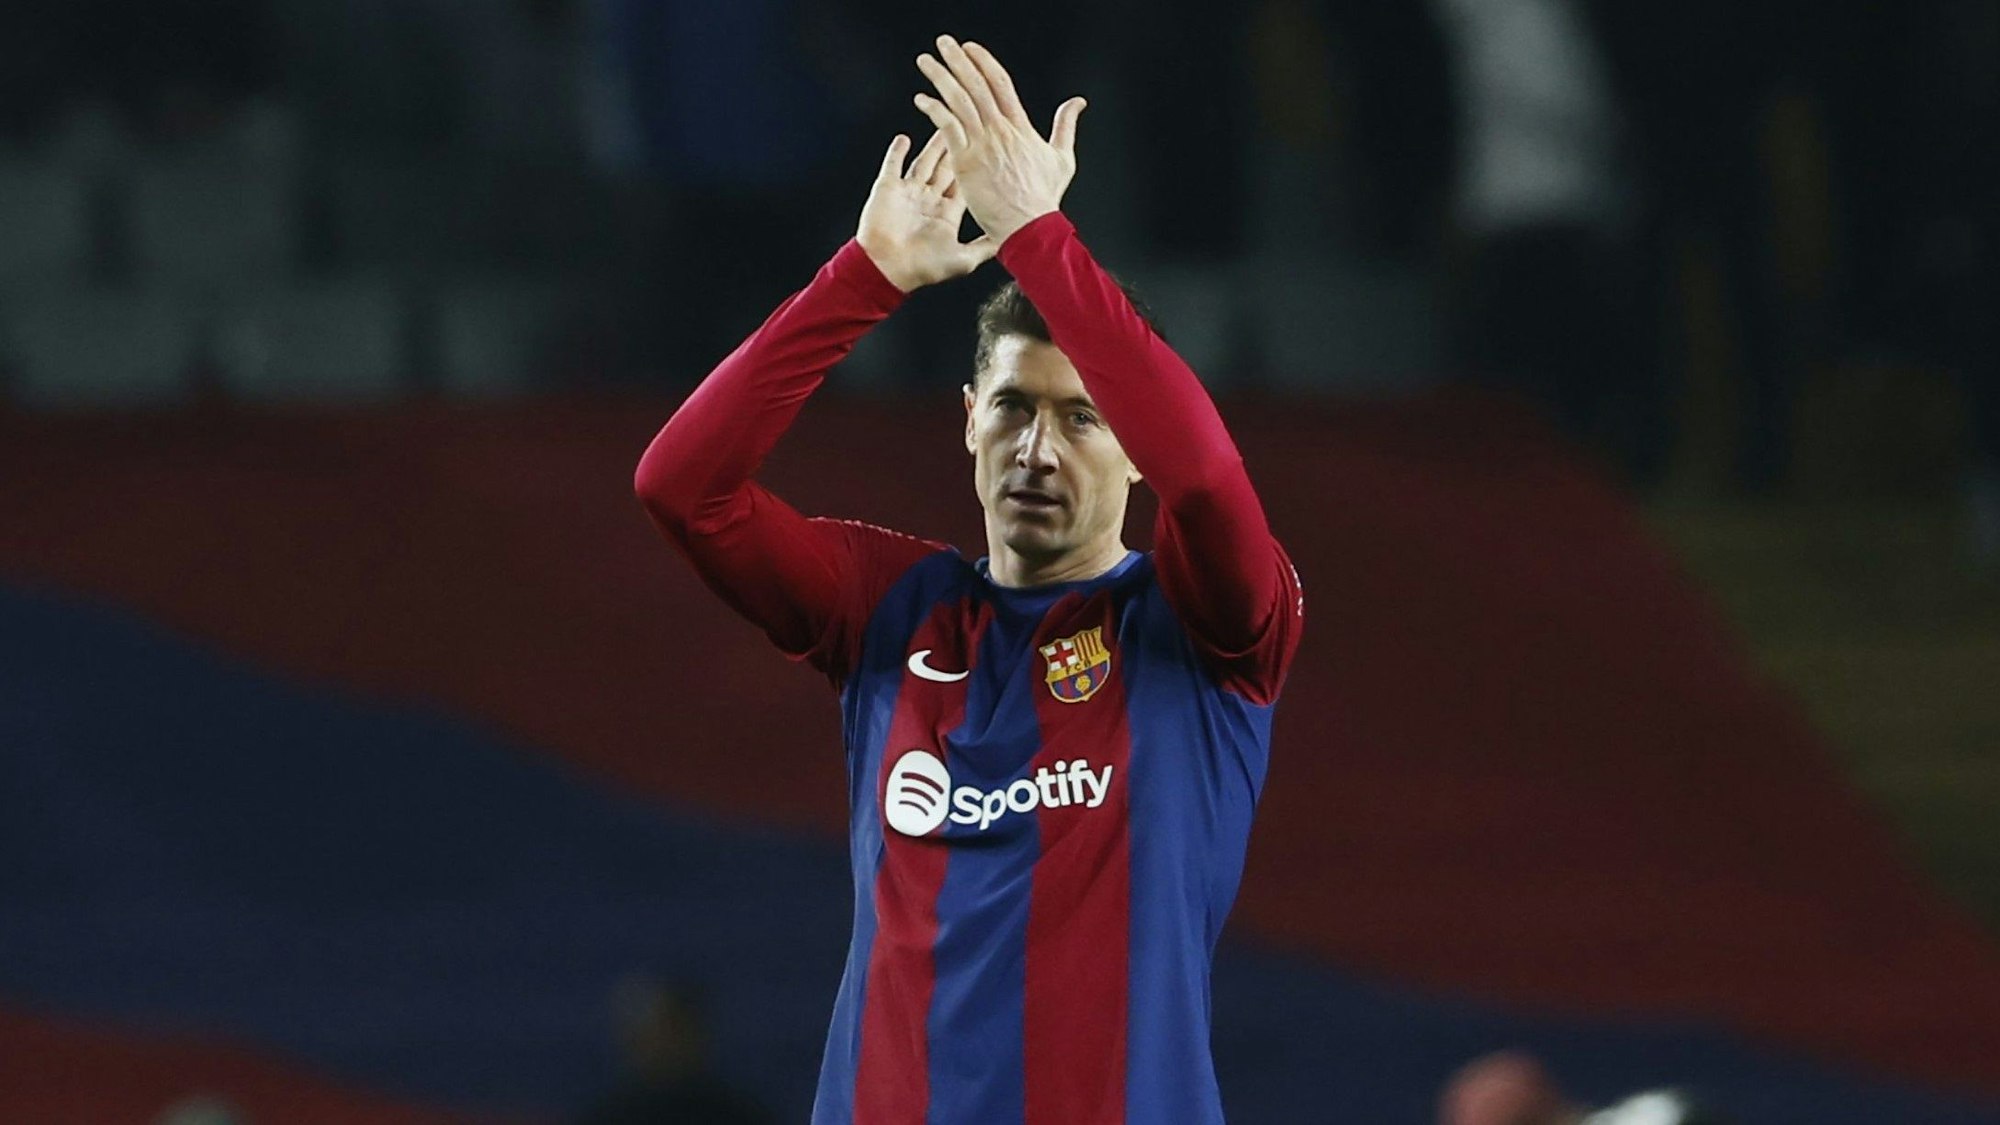 Robert Lewandowski klatscht nach dem Ligaspiel des FC Barcelona gegen Atlético Madrid in Richtung der Barca-Fans.